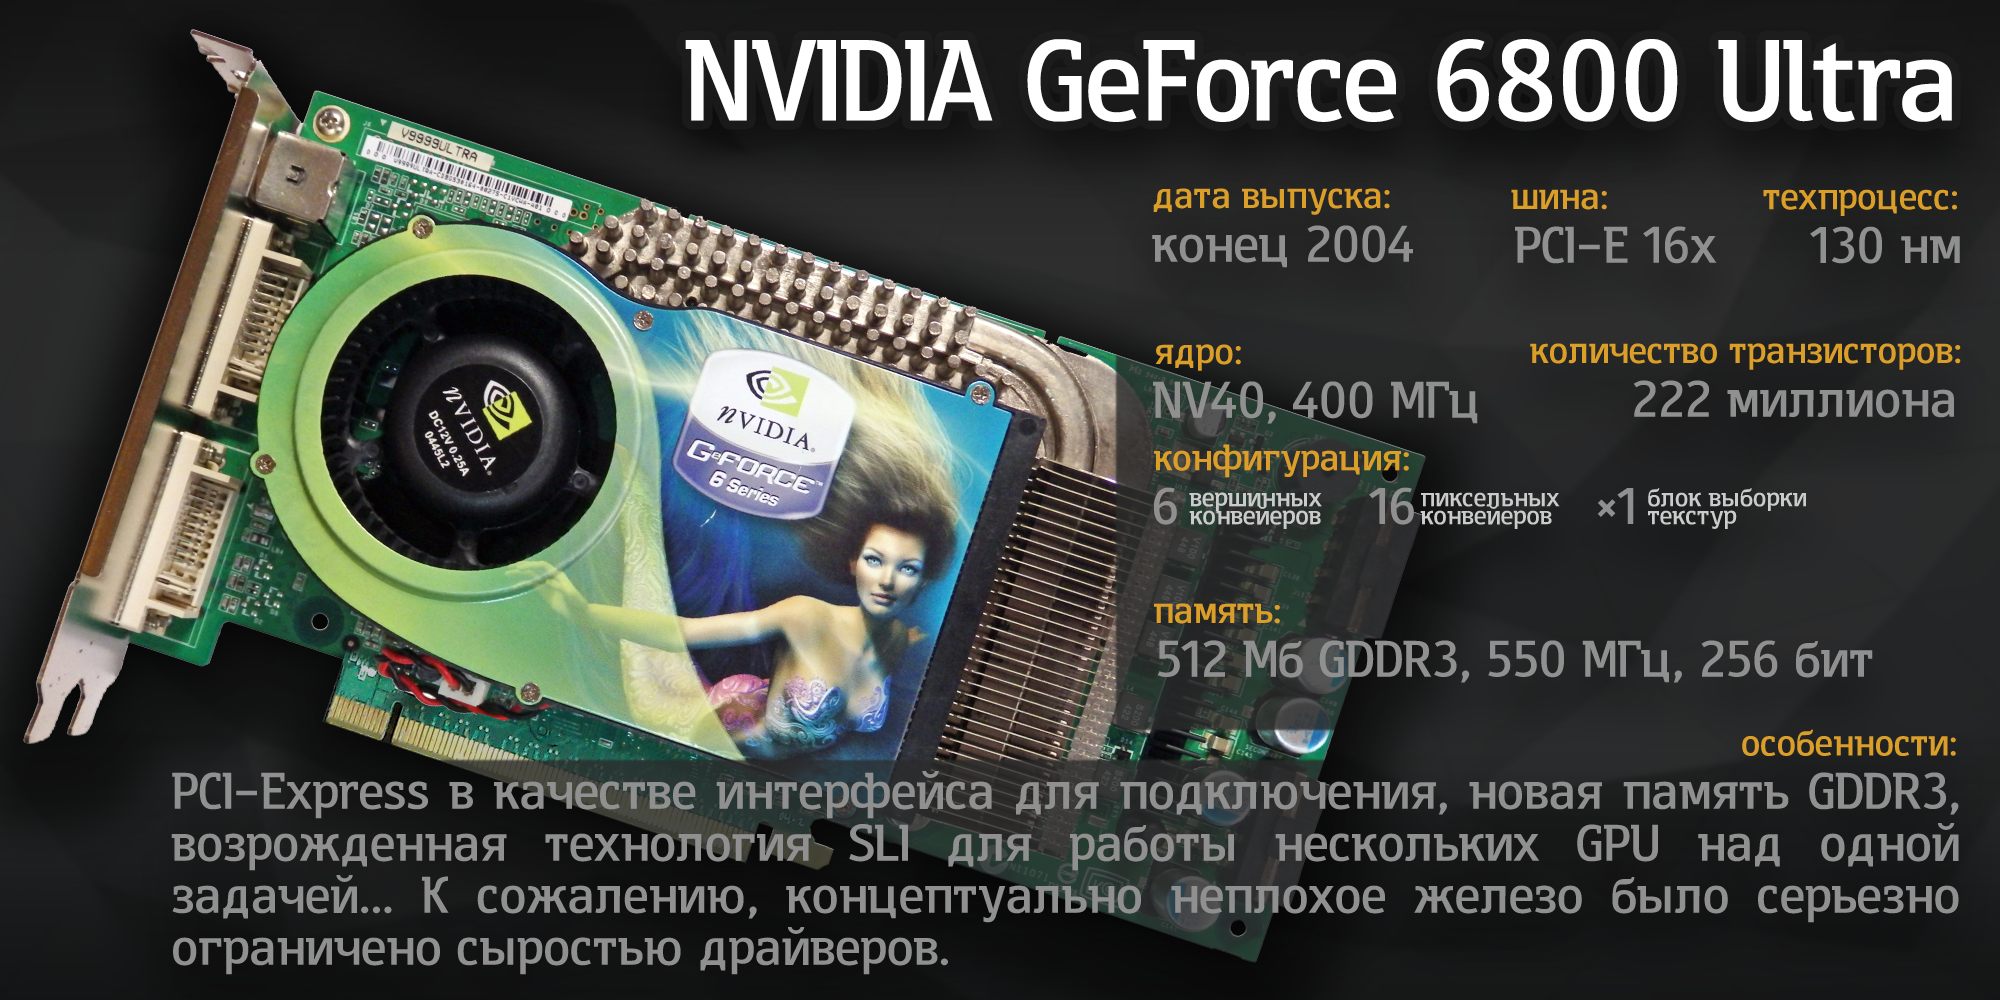 Nvidia geforce series